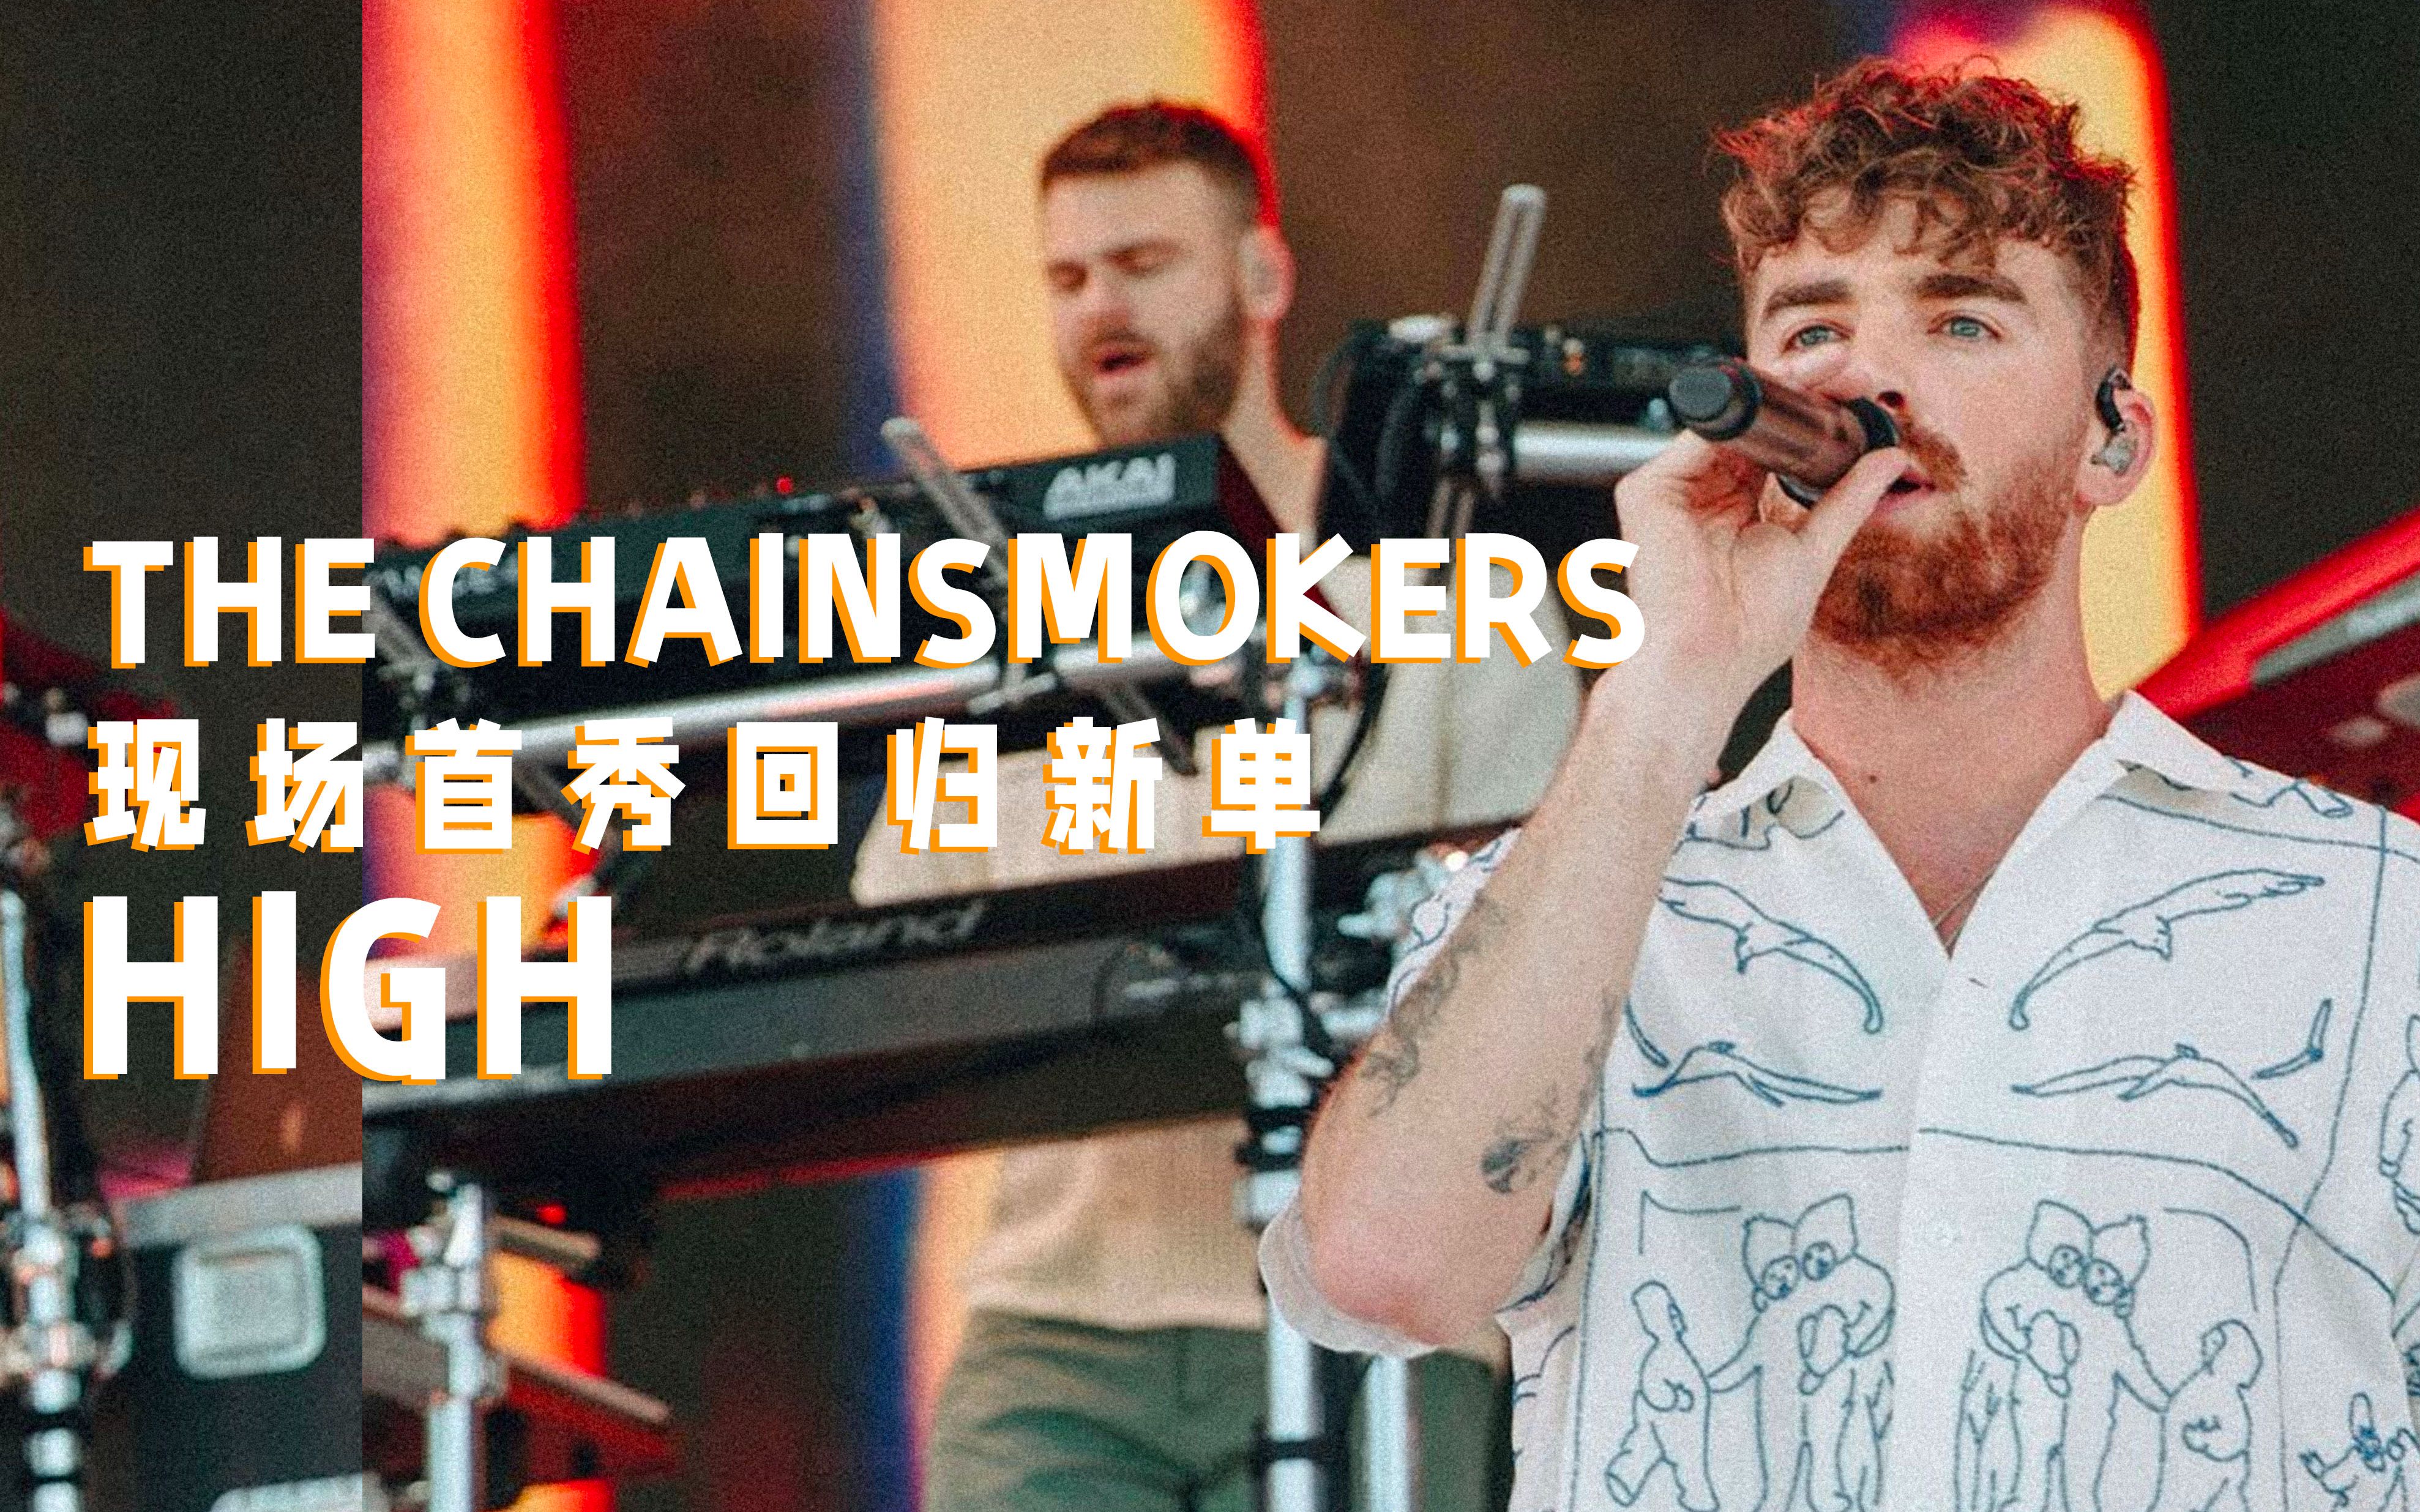 【中字现场】The Chainsmokers现场首秀回归新单《High》